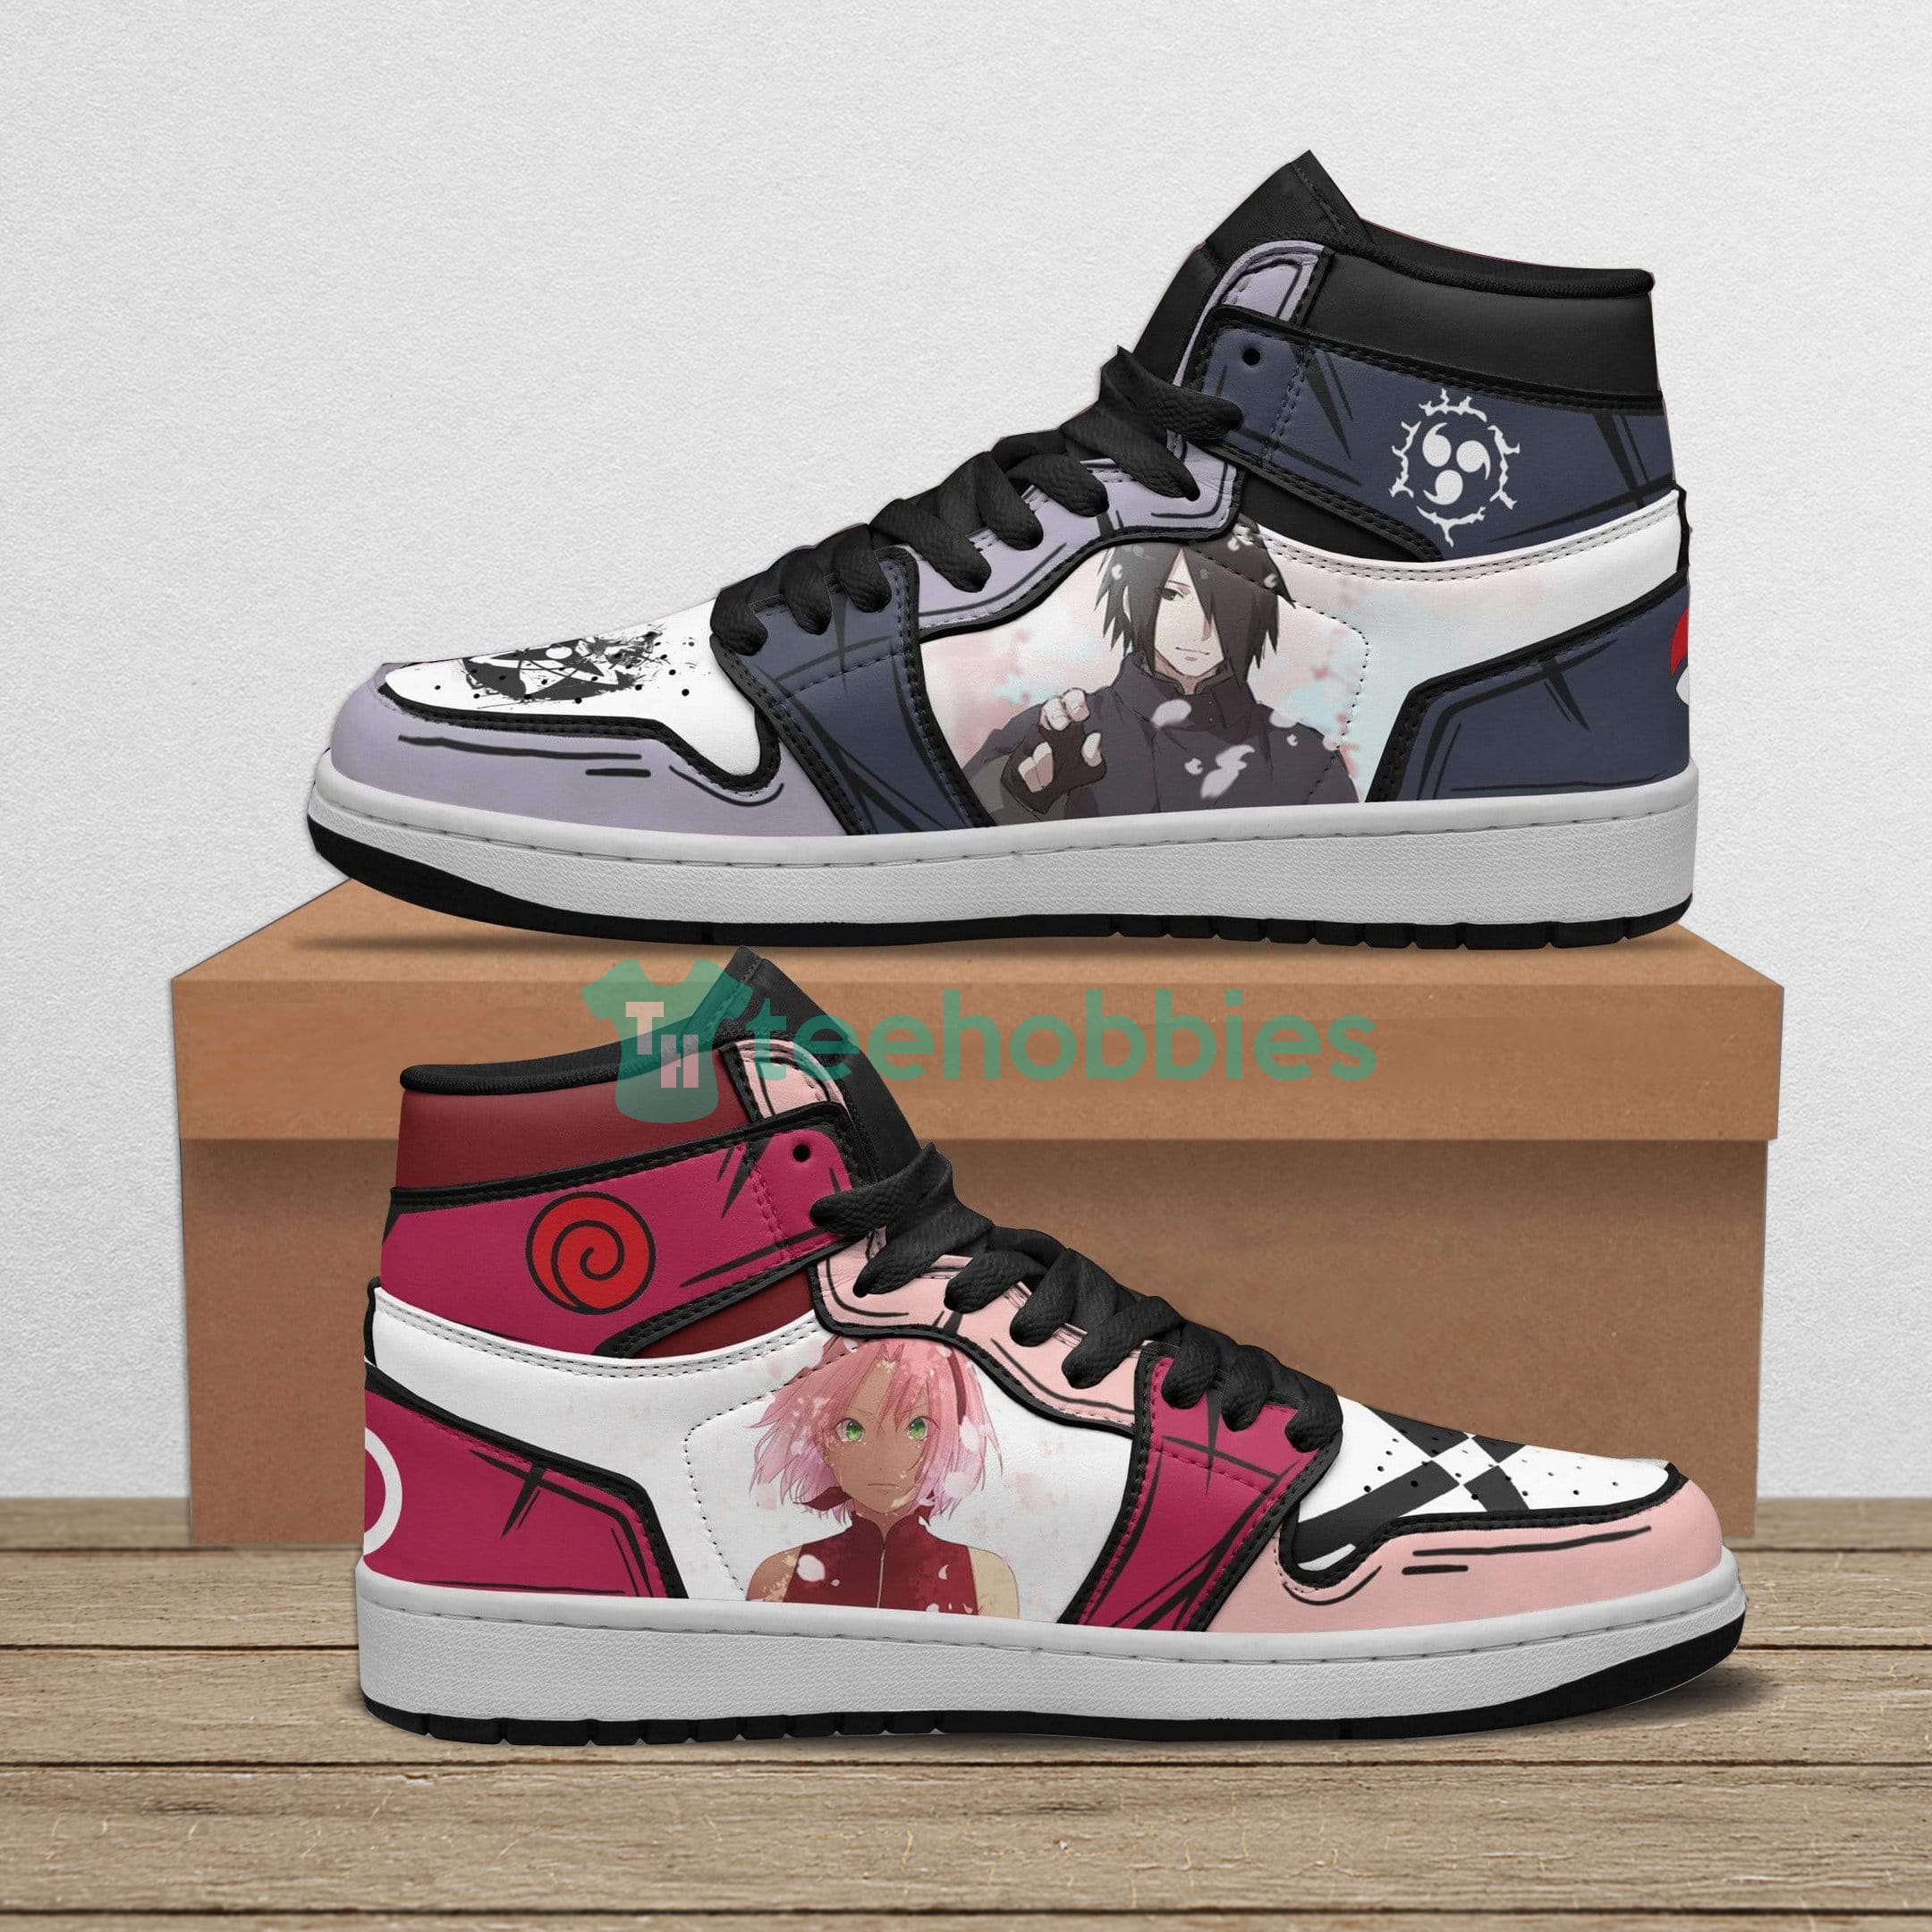 Monkey D Luffy Gear 4 Sneakers Custom Anime One Piece Air Jordan 13 Shoes -  It's RobinLori...NOW!